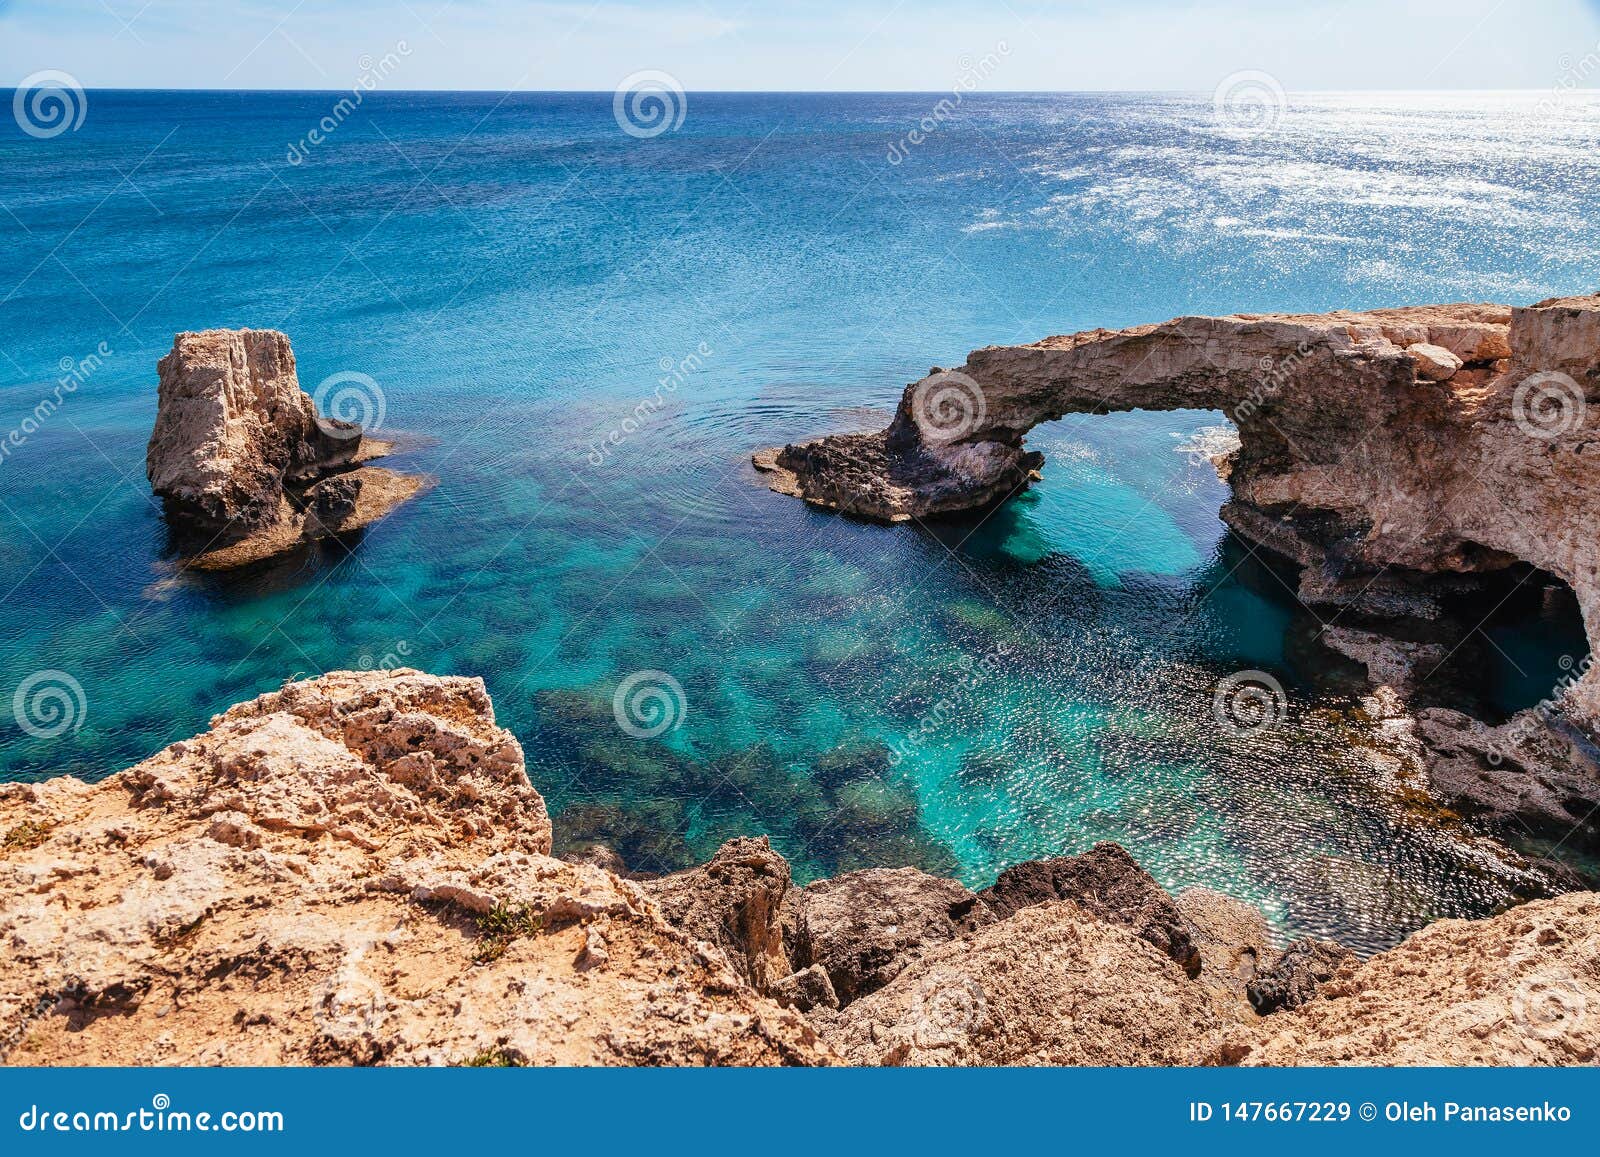 beautiful natural rock arch near of ayia napa, cavo greco and protaras on cyprus island, mediterranean sea. legendary bridge